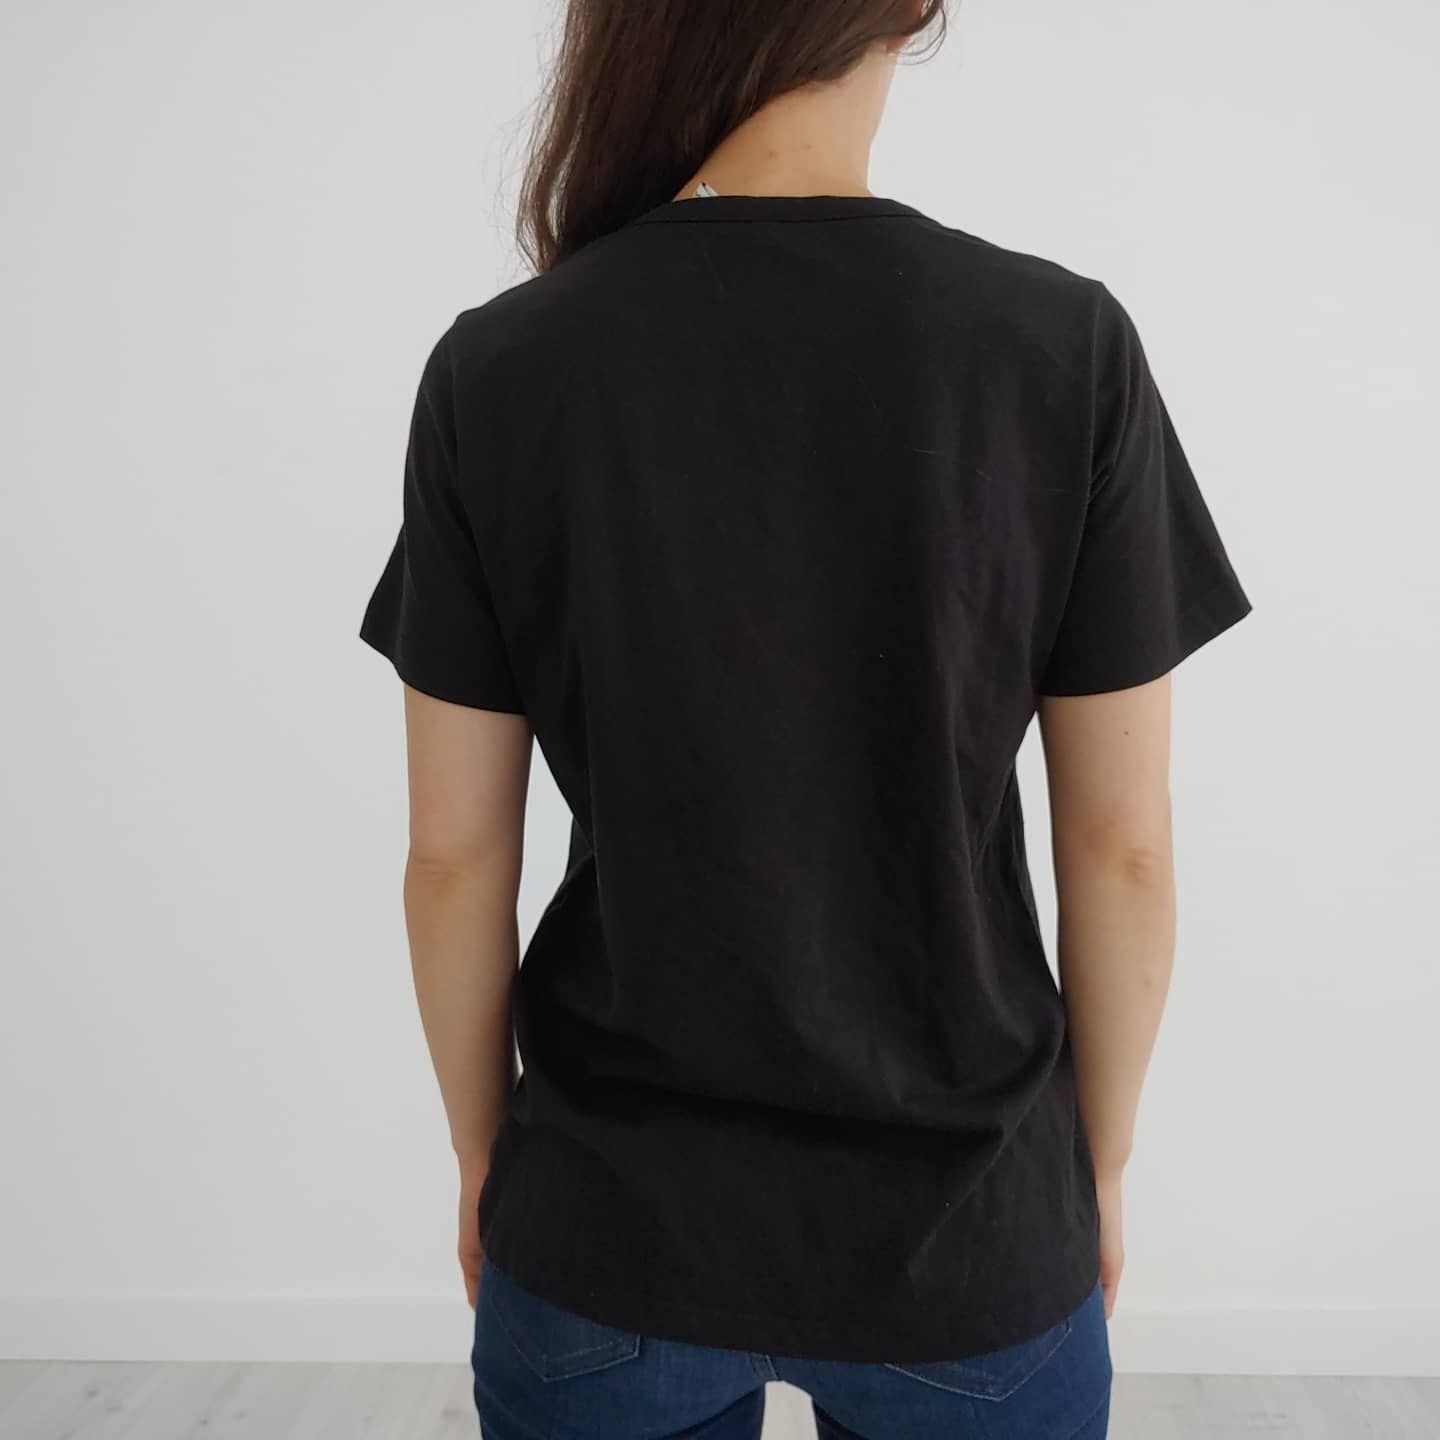 T-shirt preta, Tiffosi, tamanho S, NOVA, sem etiqueta